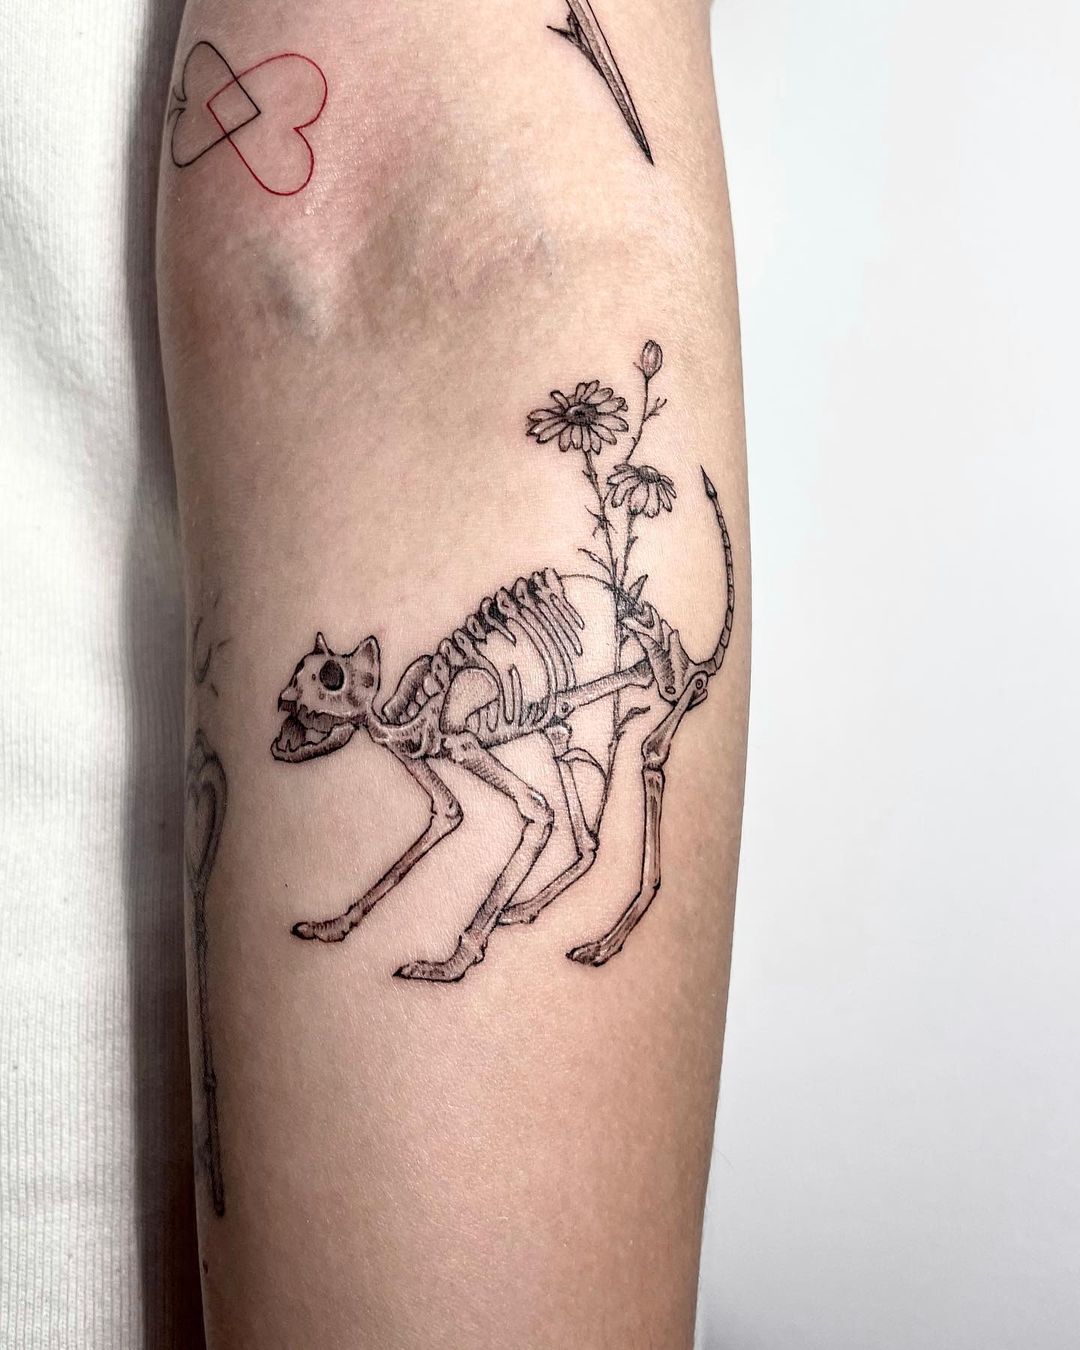 30 Beautiful Dog tattoo ideas for dog lovers  by Abhishek Joshi  Medium